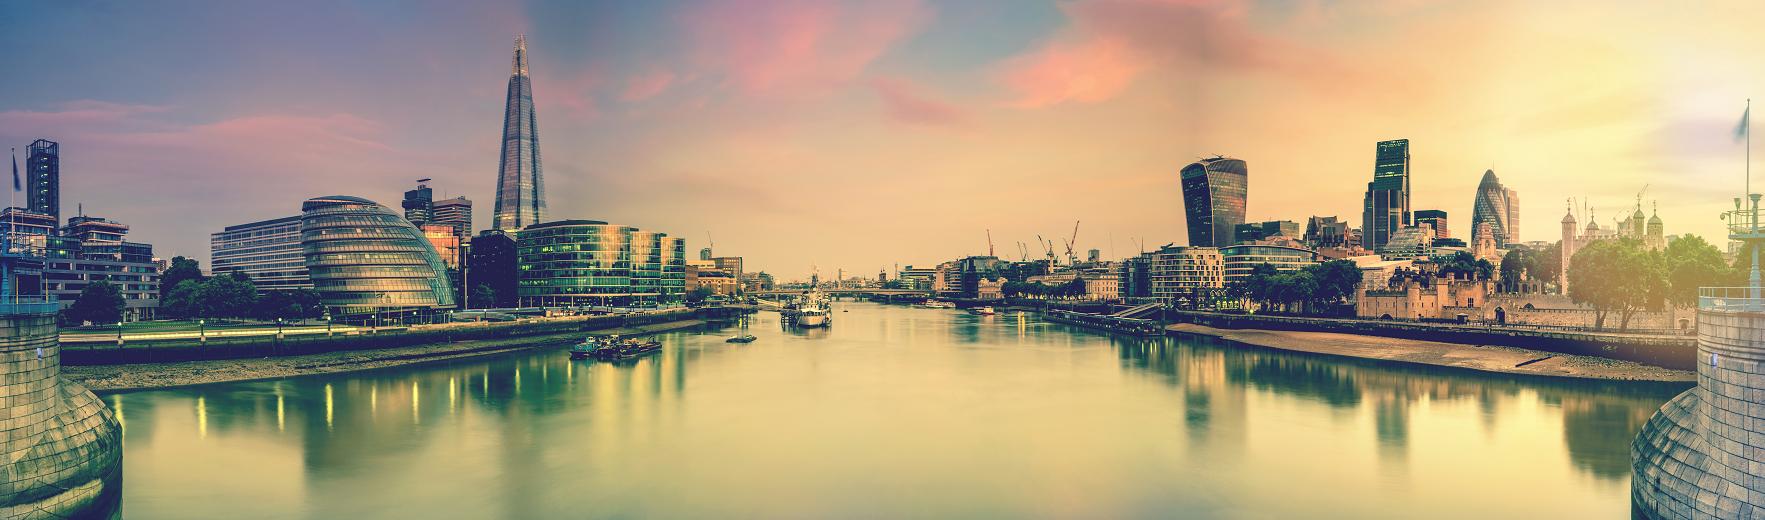 London panorama from Tower Bridge